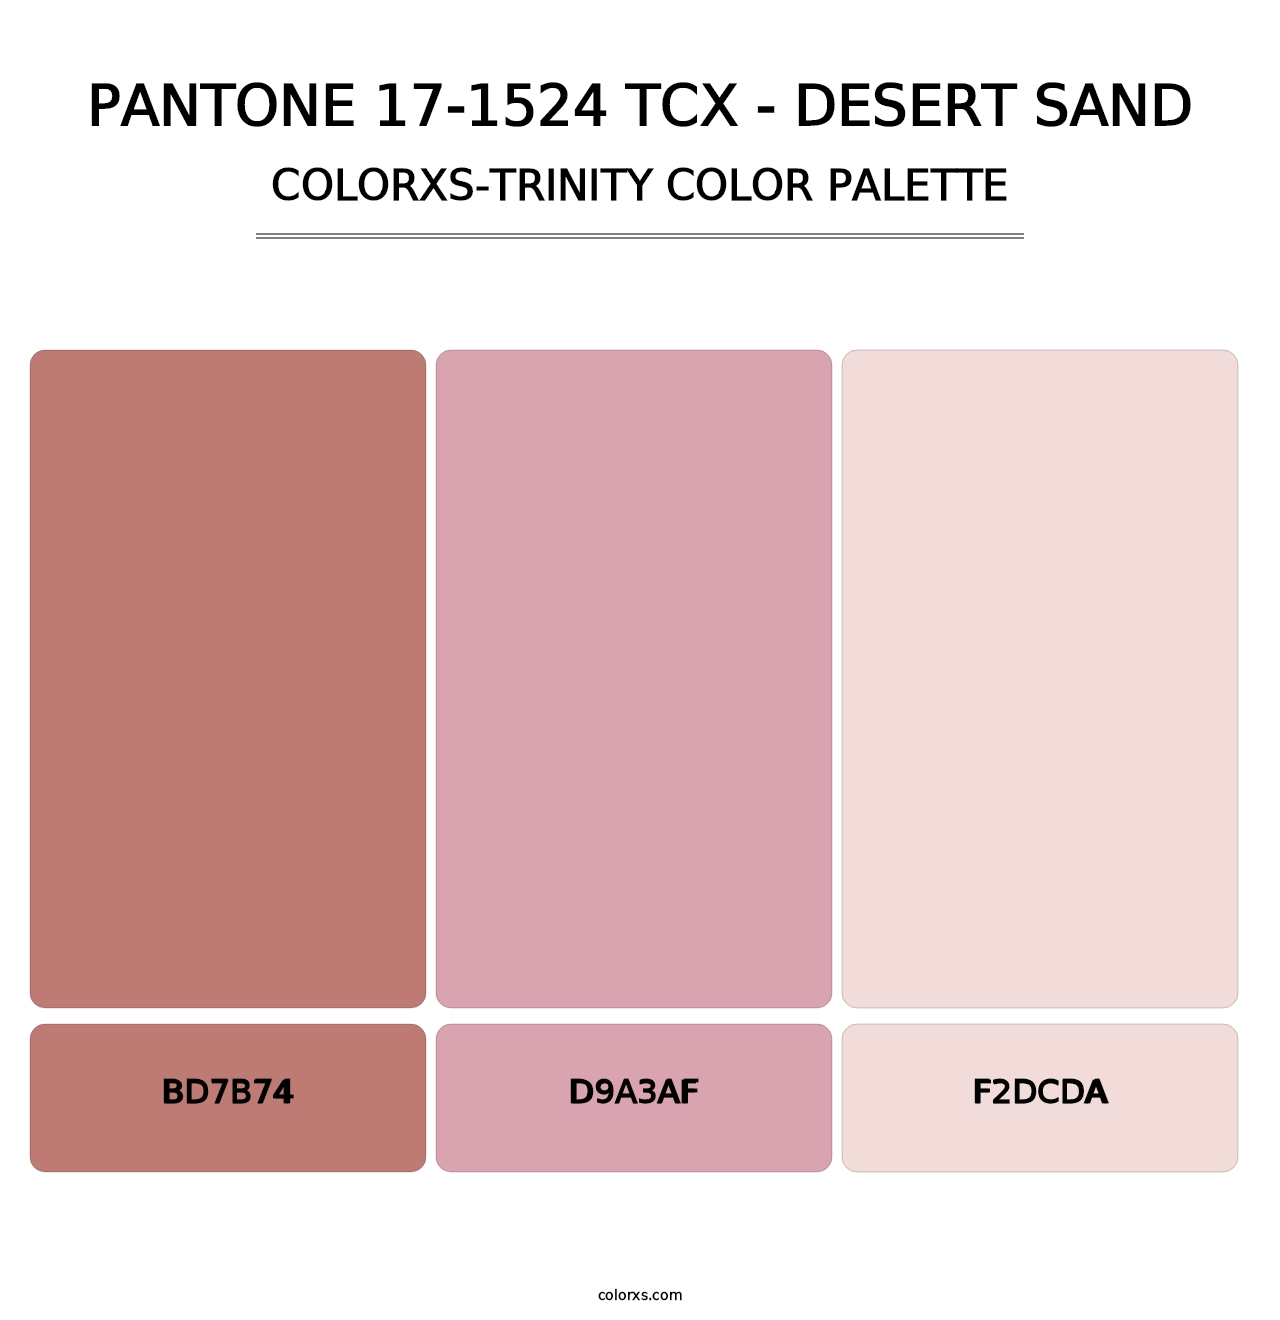 PANTONE 17-1524 TCX - Desert Sand - Colorxs Trinity Palette